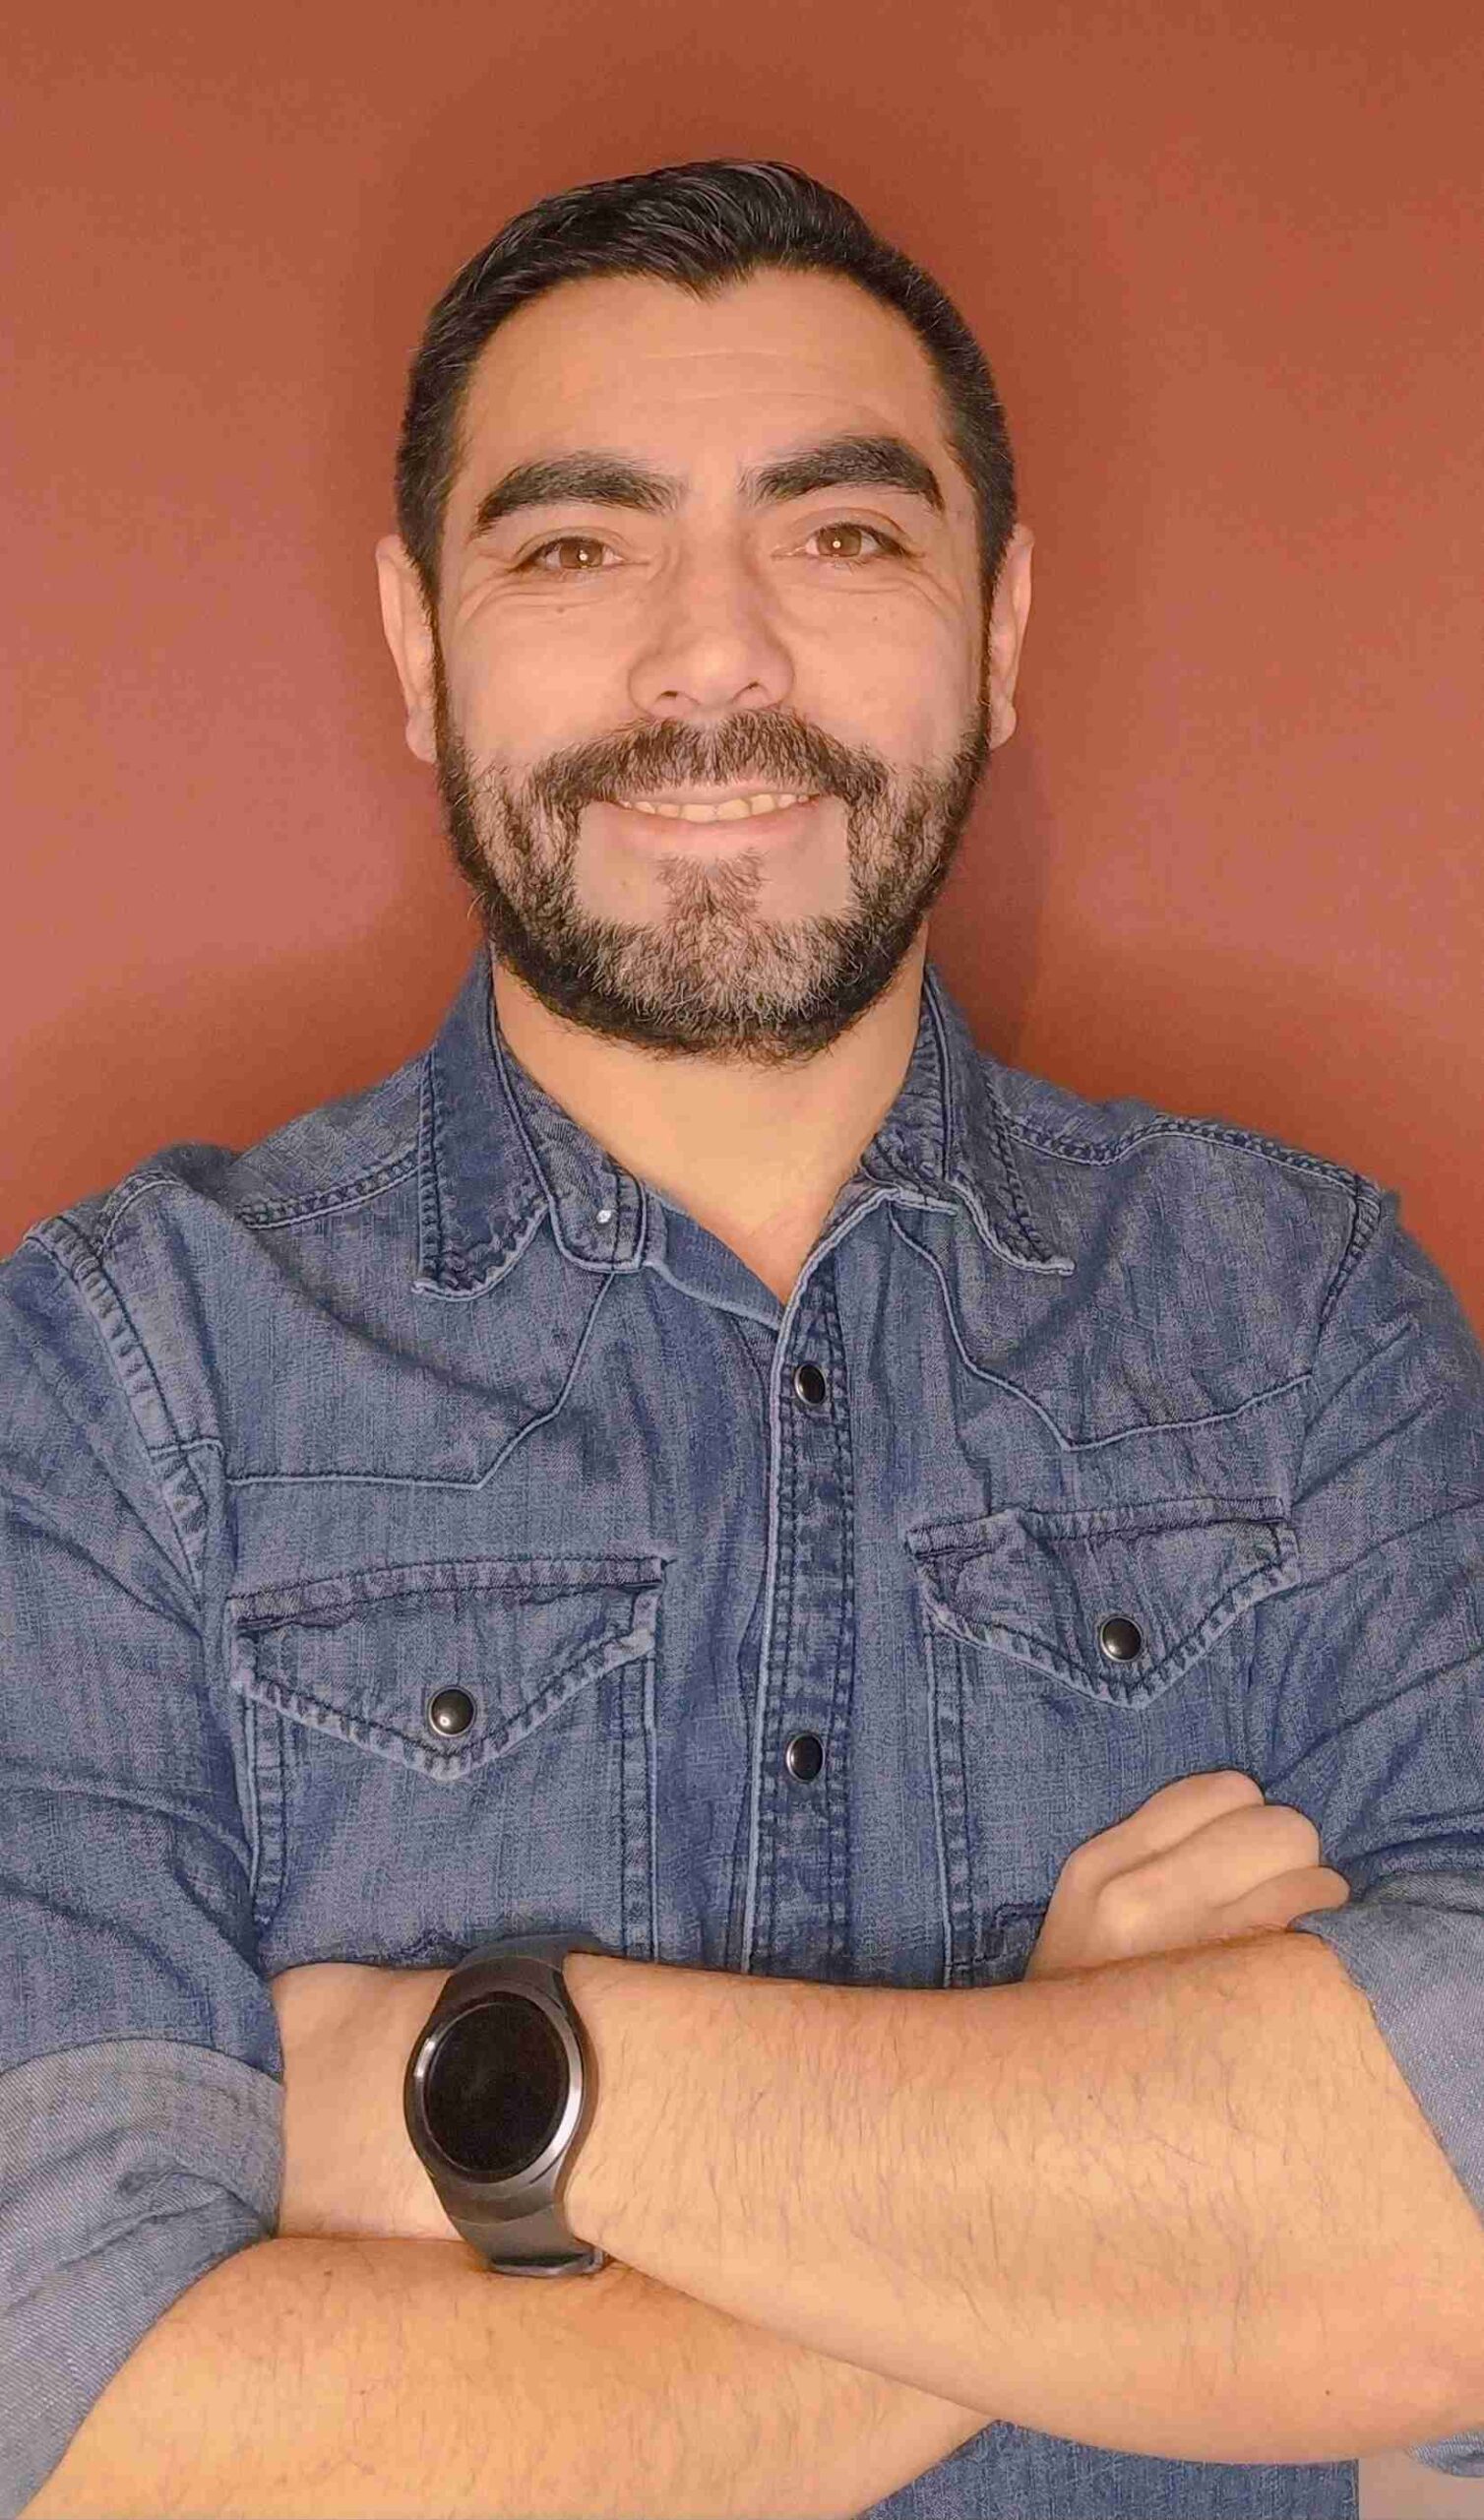 Jorge Esparza